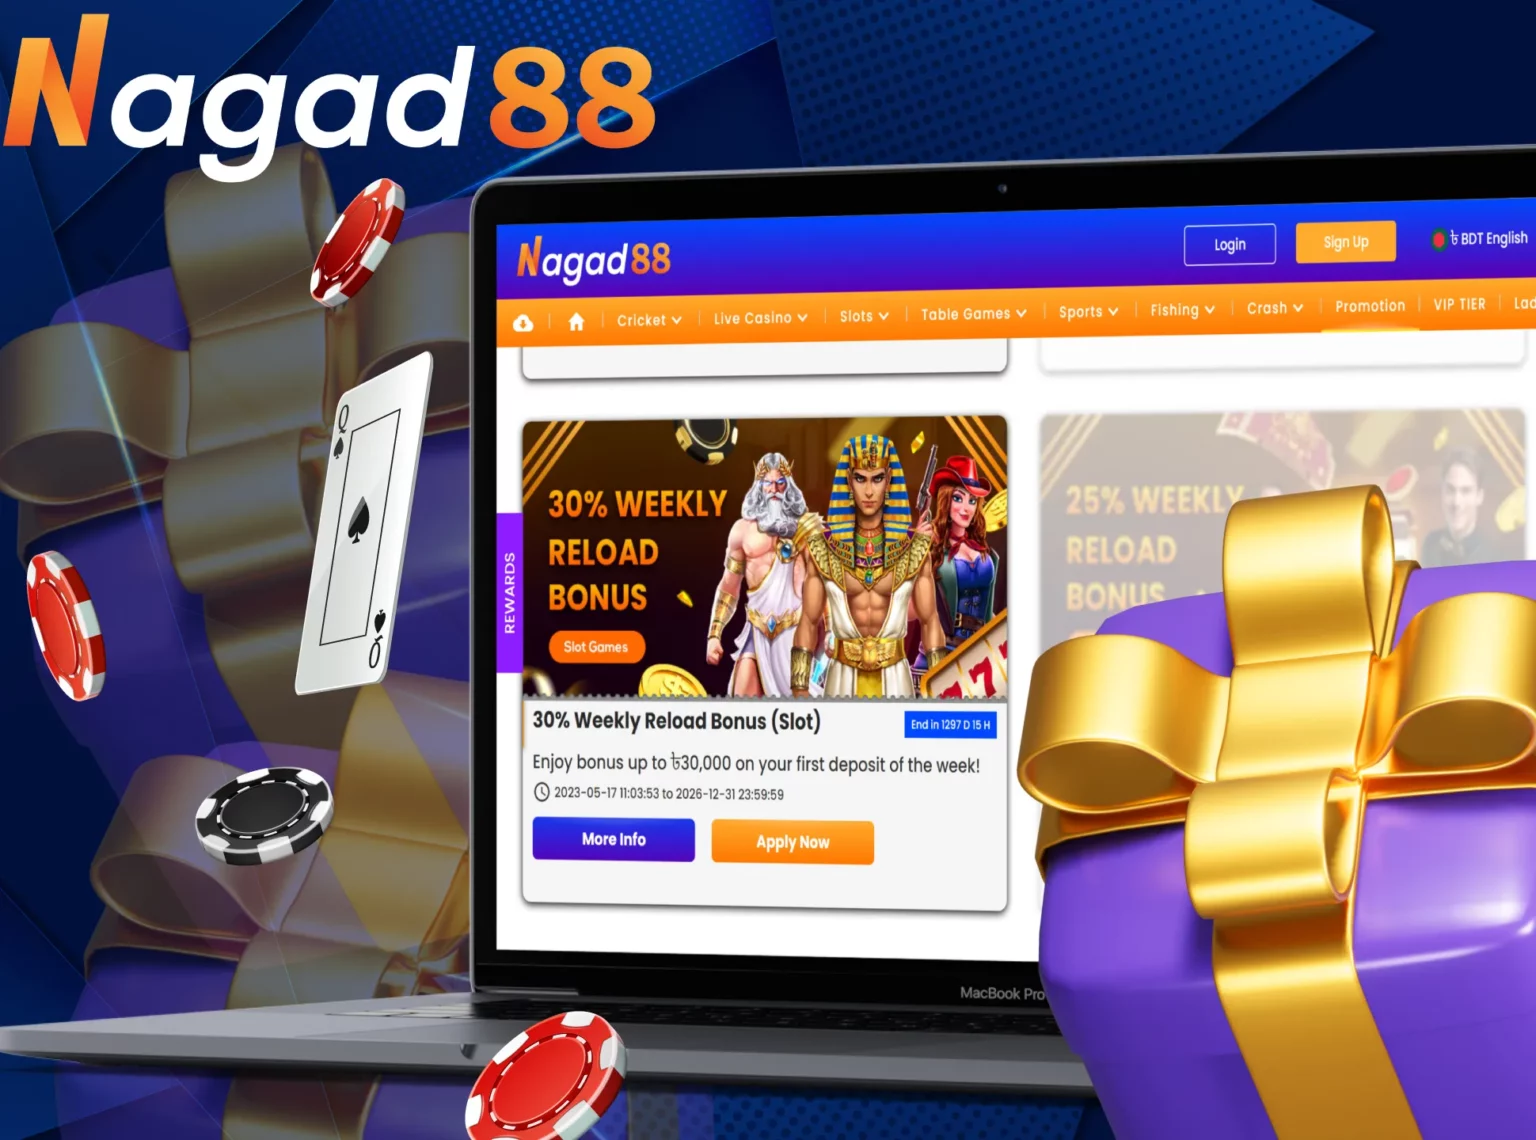 Nagad 88 casino